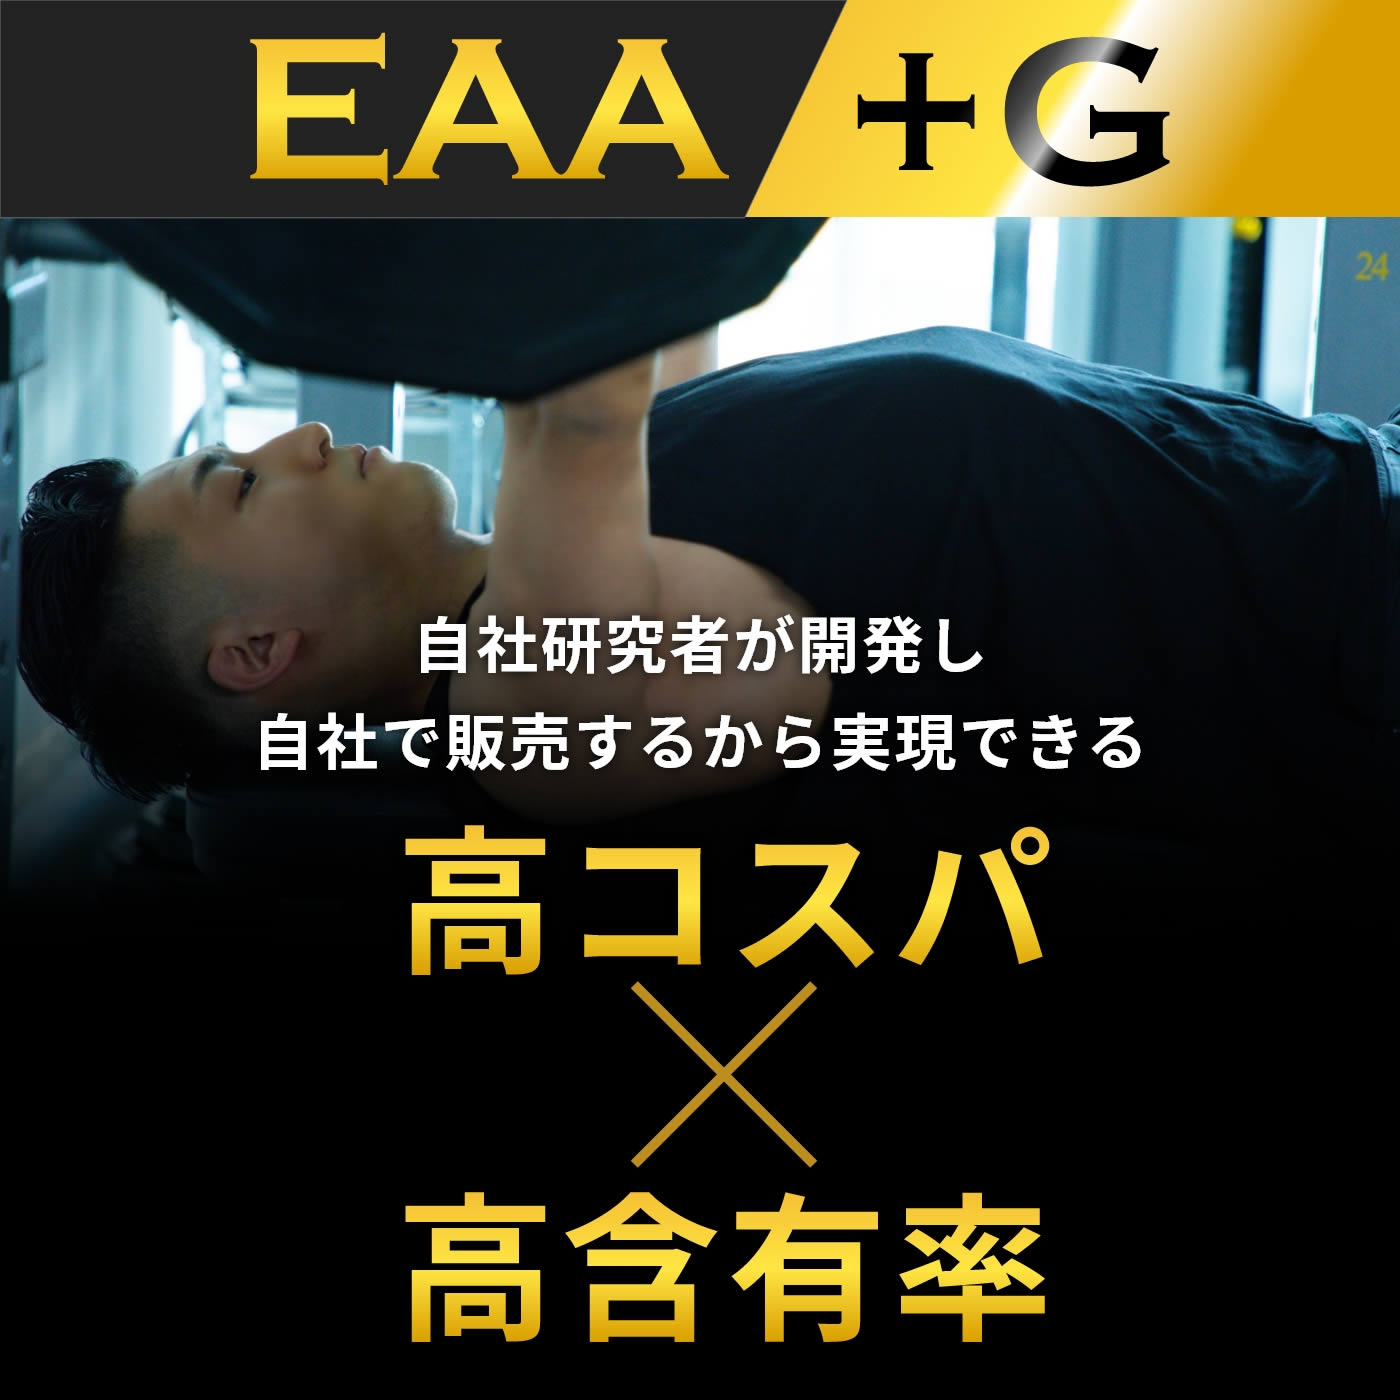 +Gシリーズ EAA 青りんご風味 420g